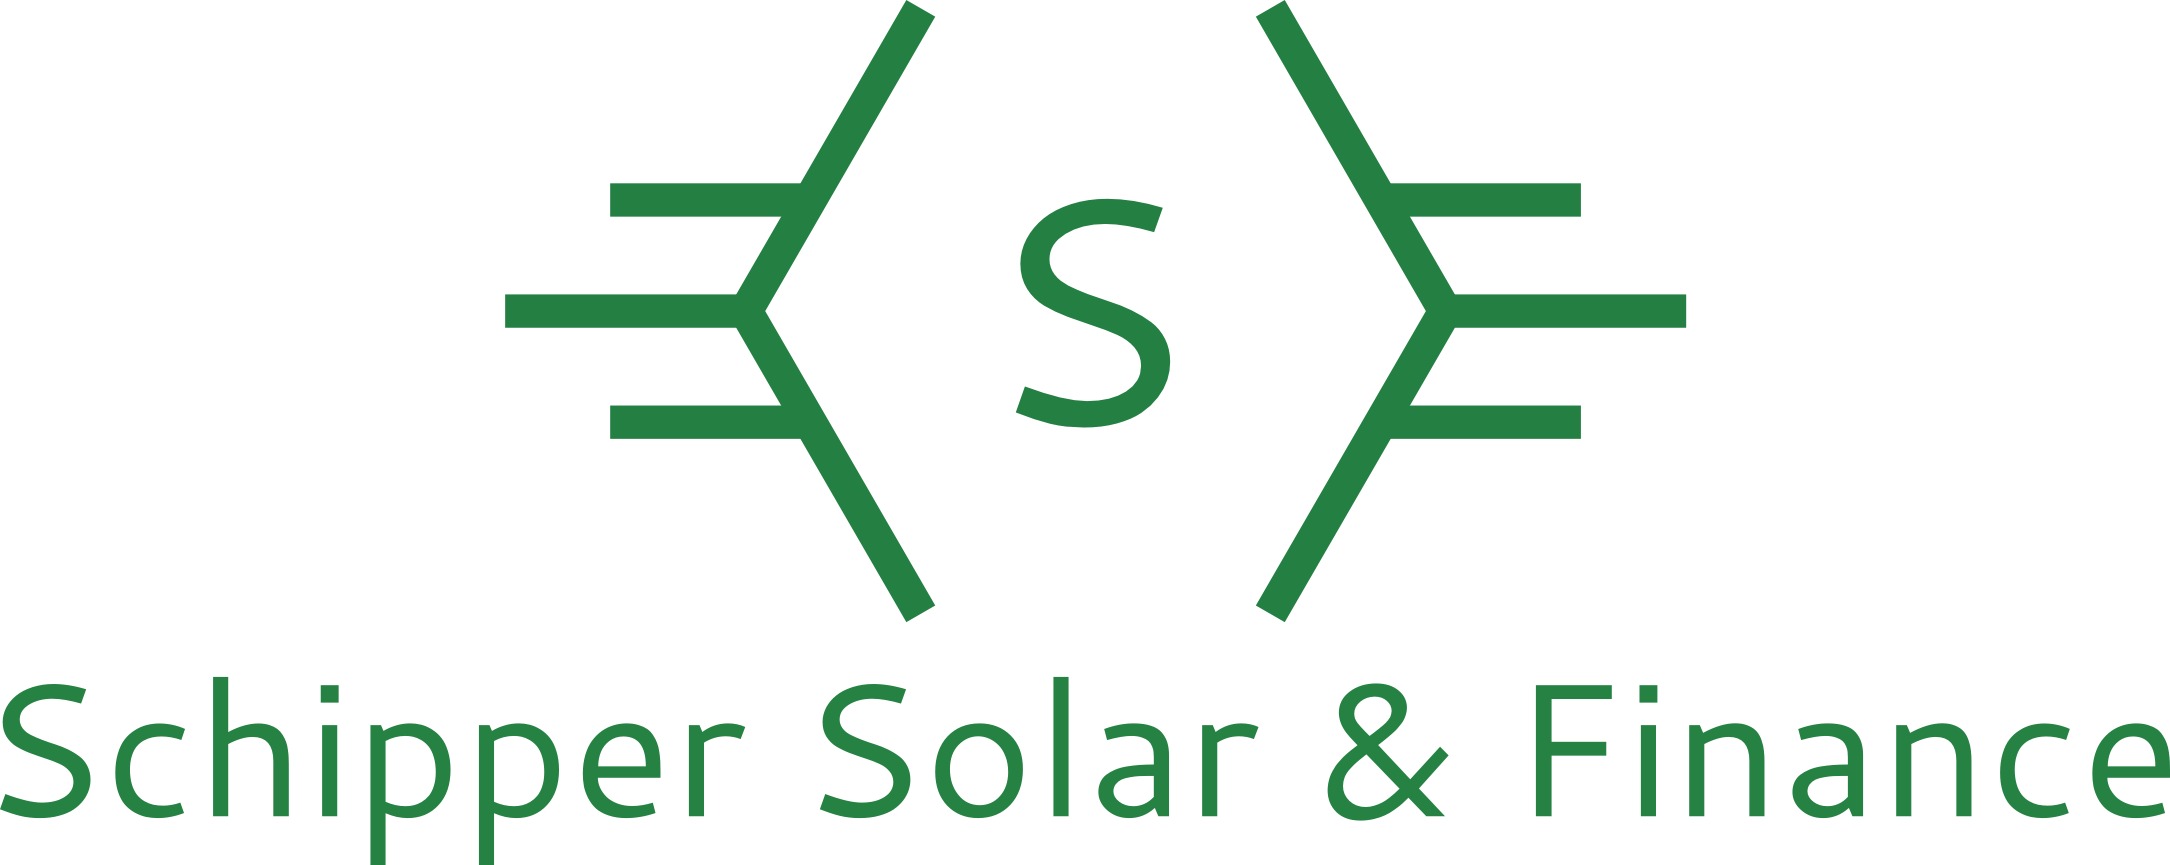 logo schipper solar